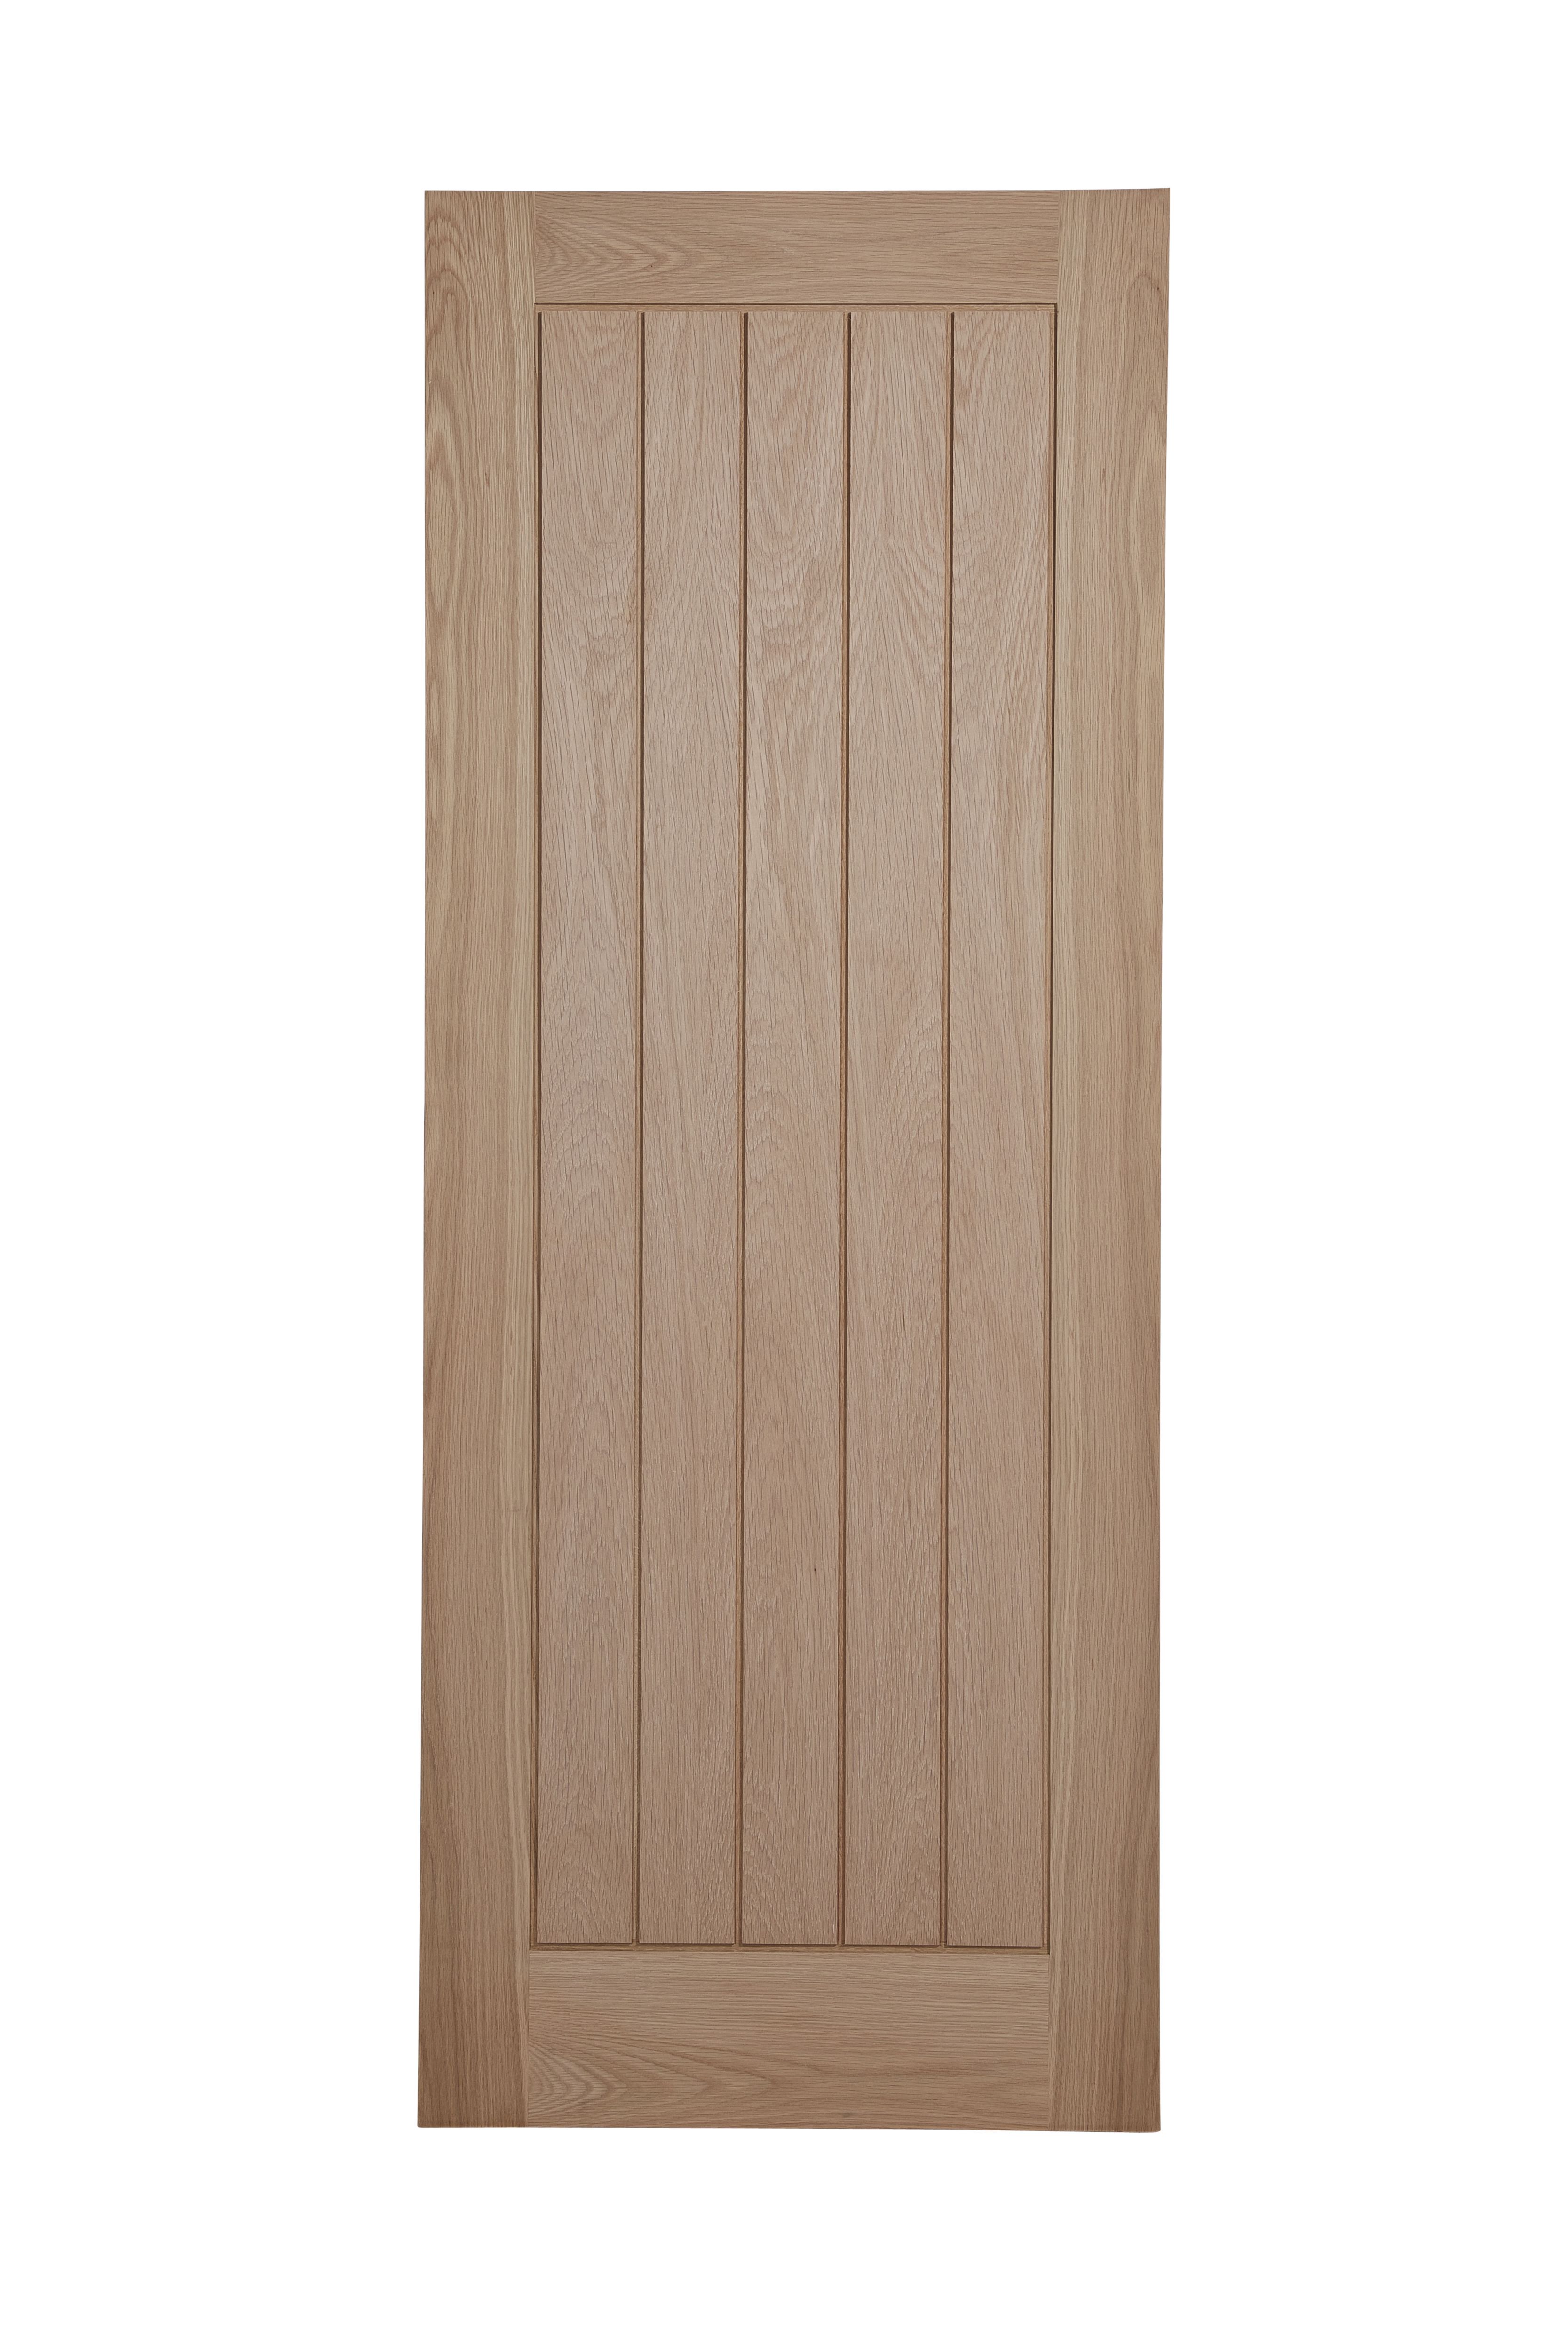 Cottage Oak Veneer Lh Rh Internal Door H 2040mm W 726mm Departments Diy At B Q